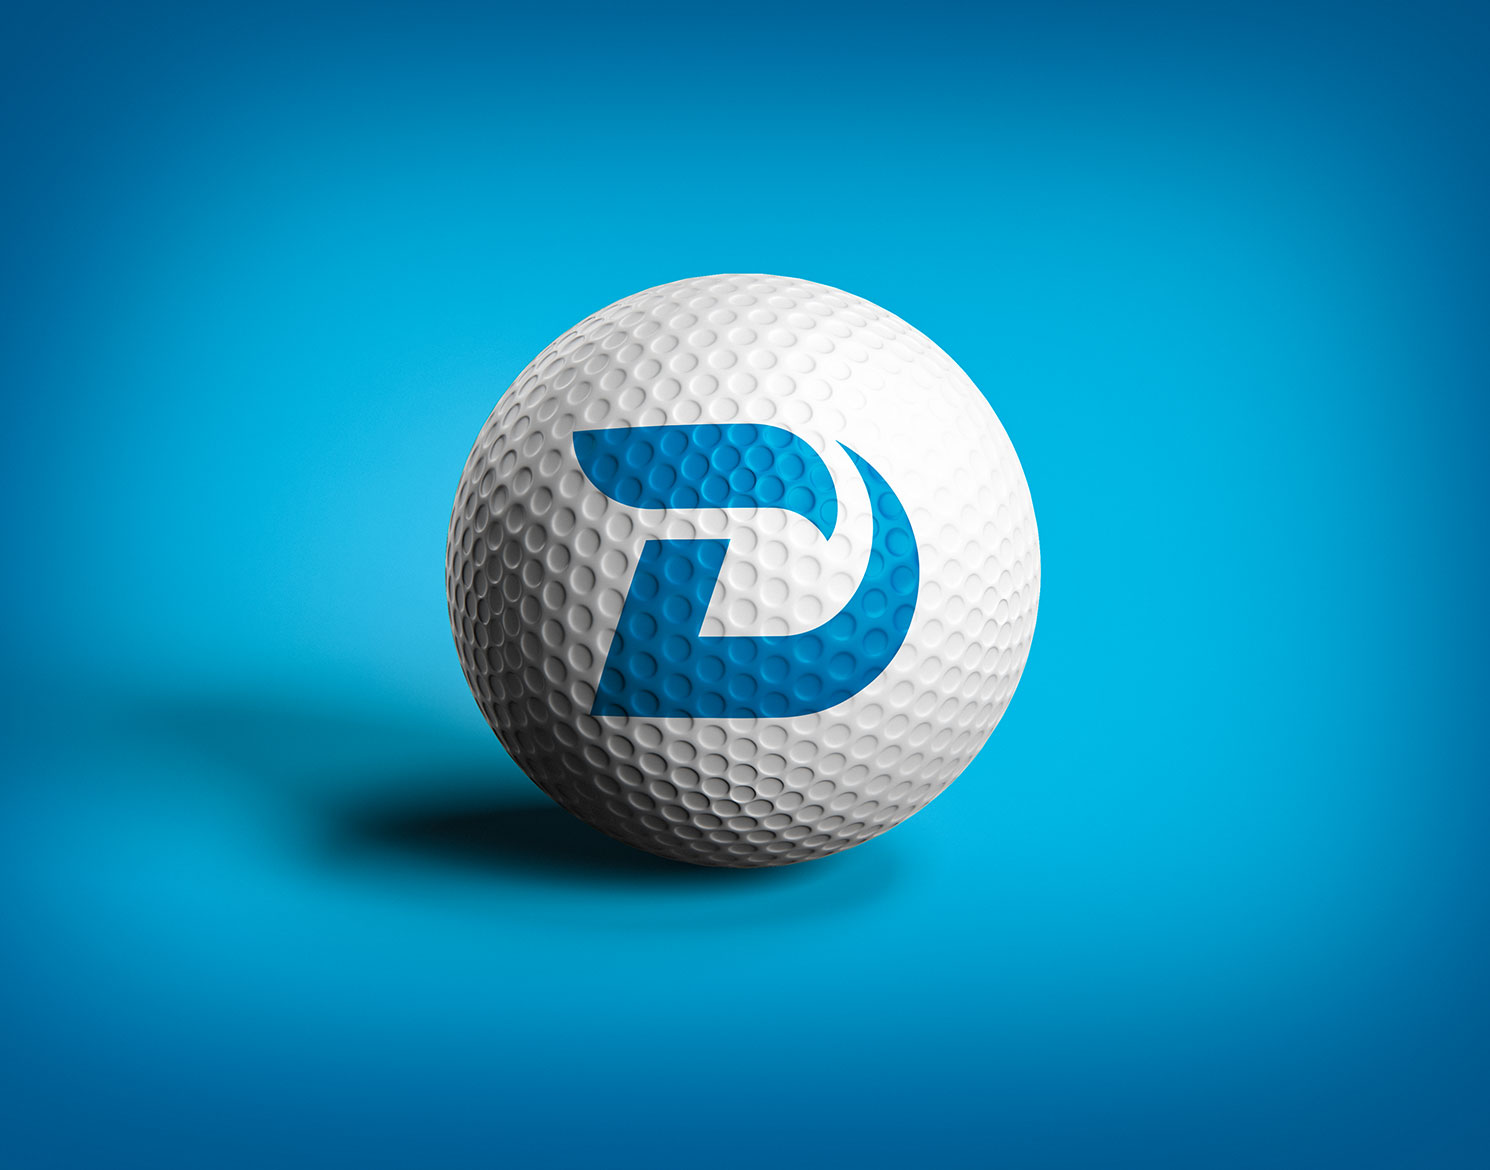 DJ Henry Dream Fund logo on a golf ball